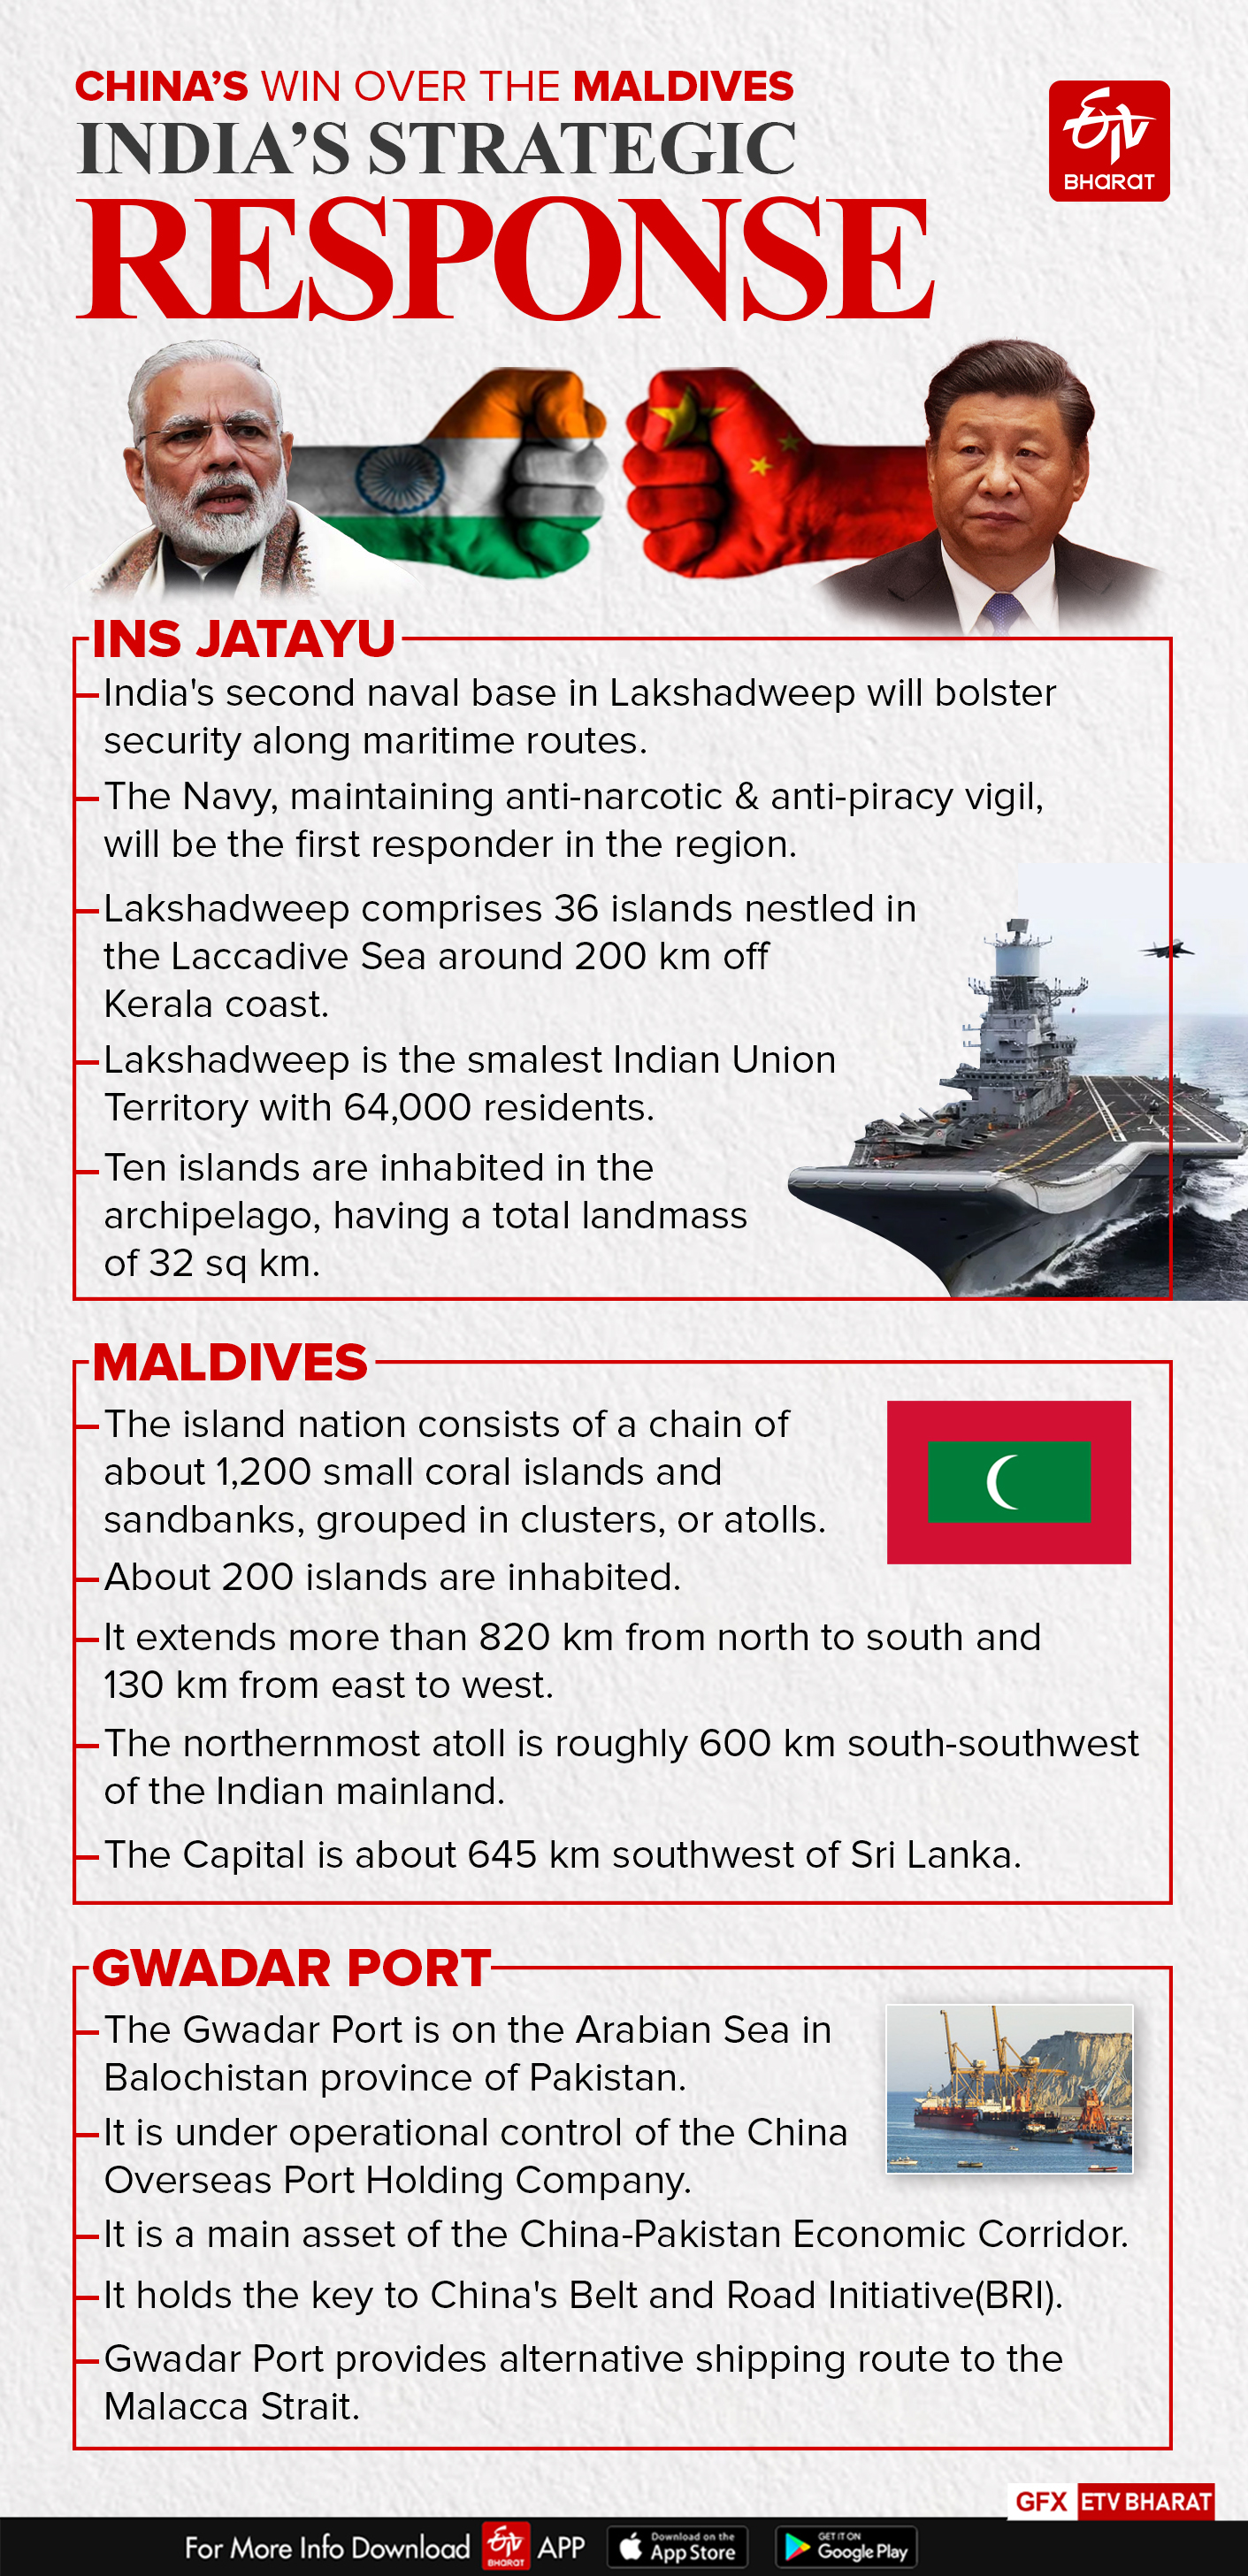 China’s Win over the Maldives: India's Strategic Response